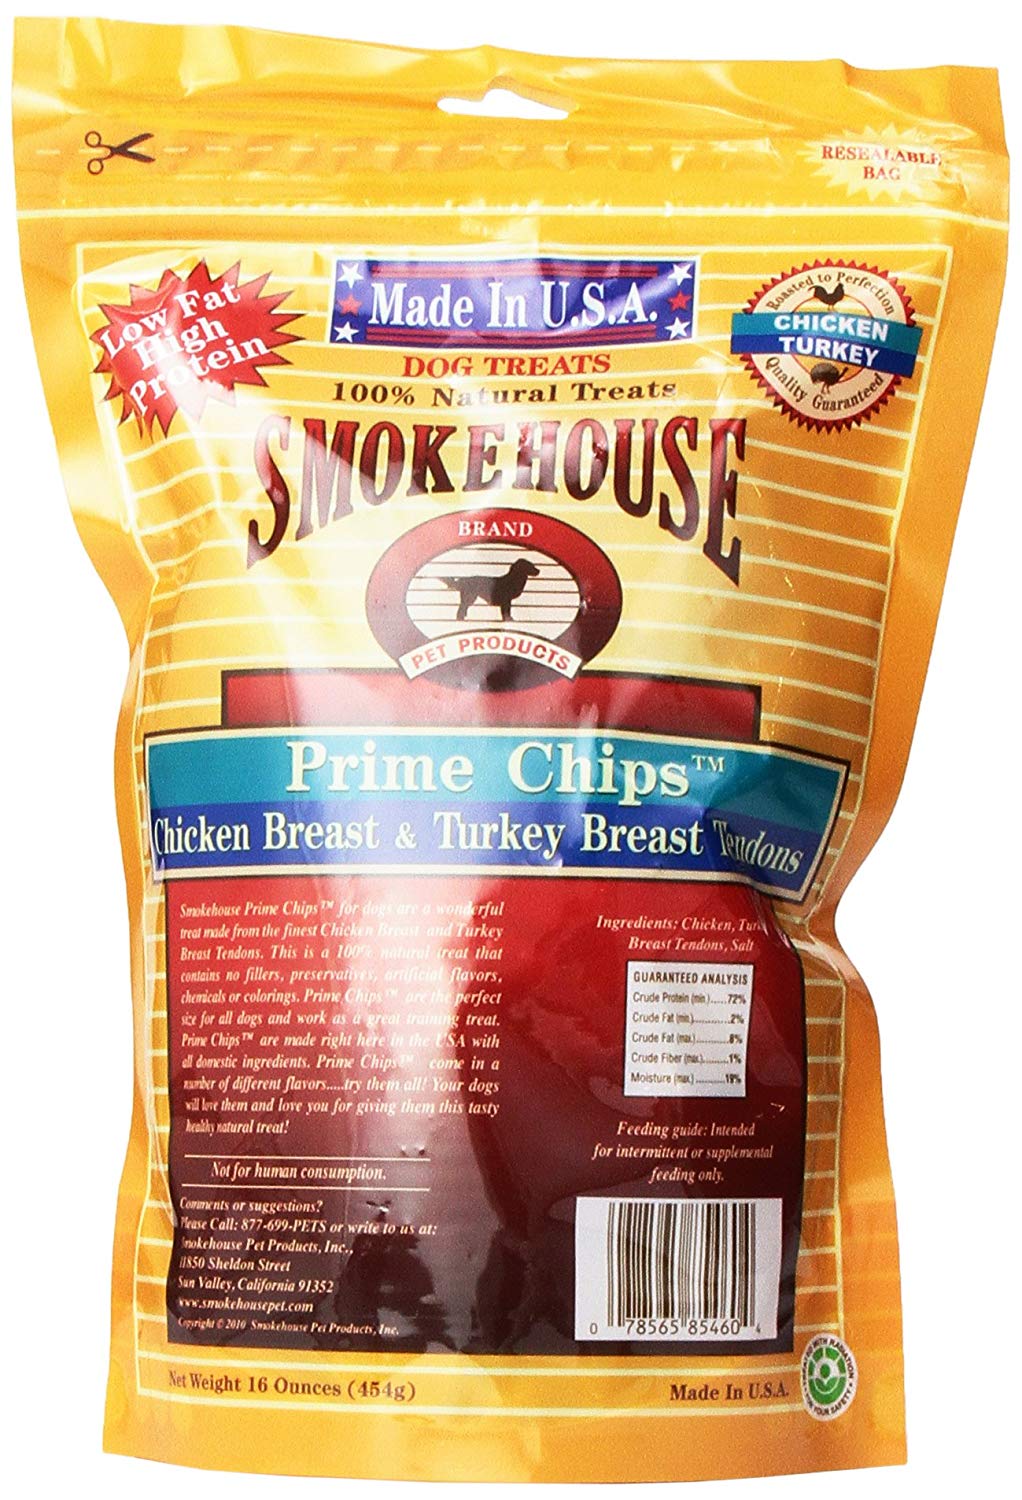 Smokehouse USA Chicken & Turkey Prime Chips Dog Treats, 16 Ounce